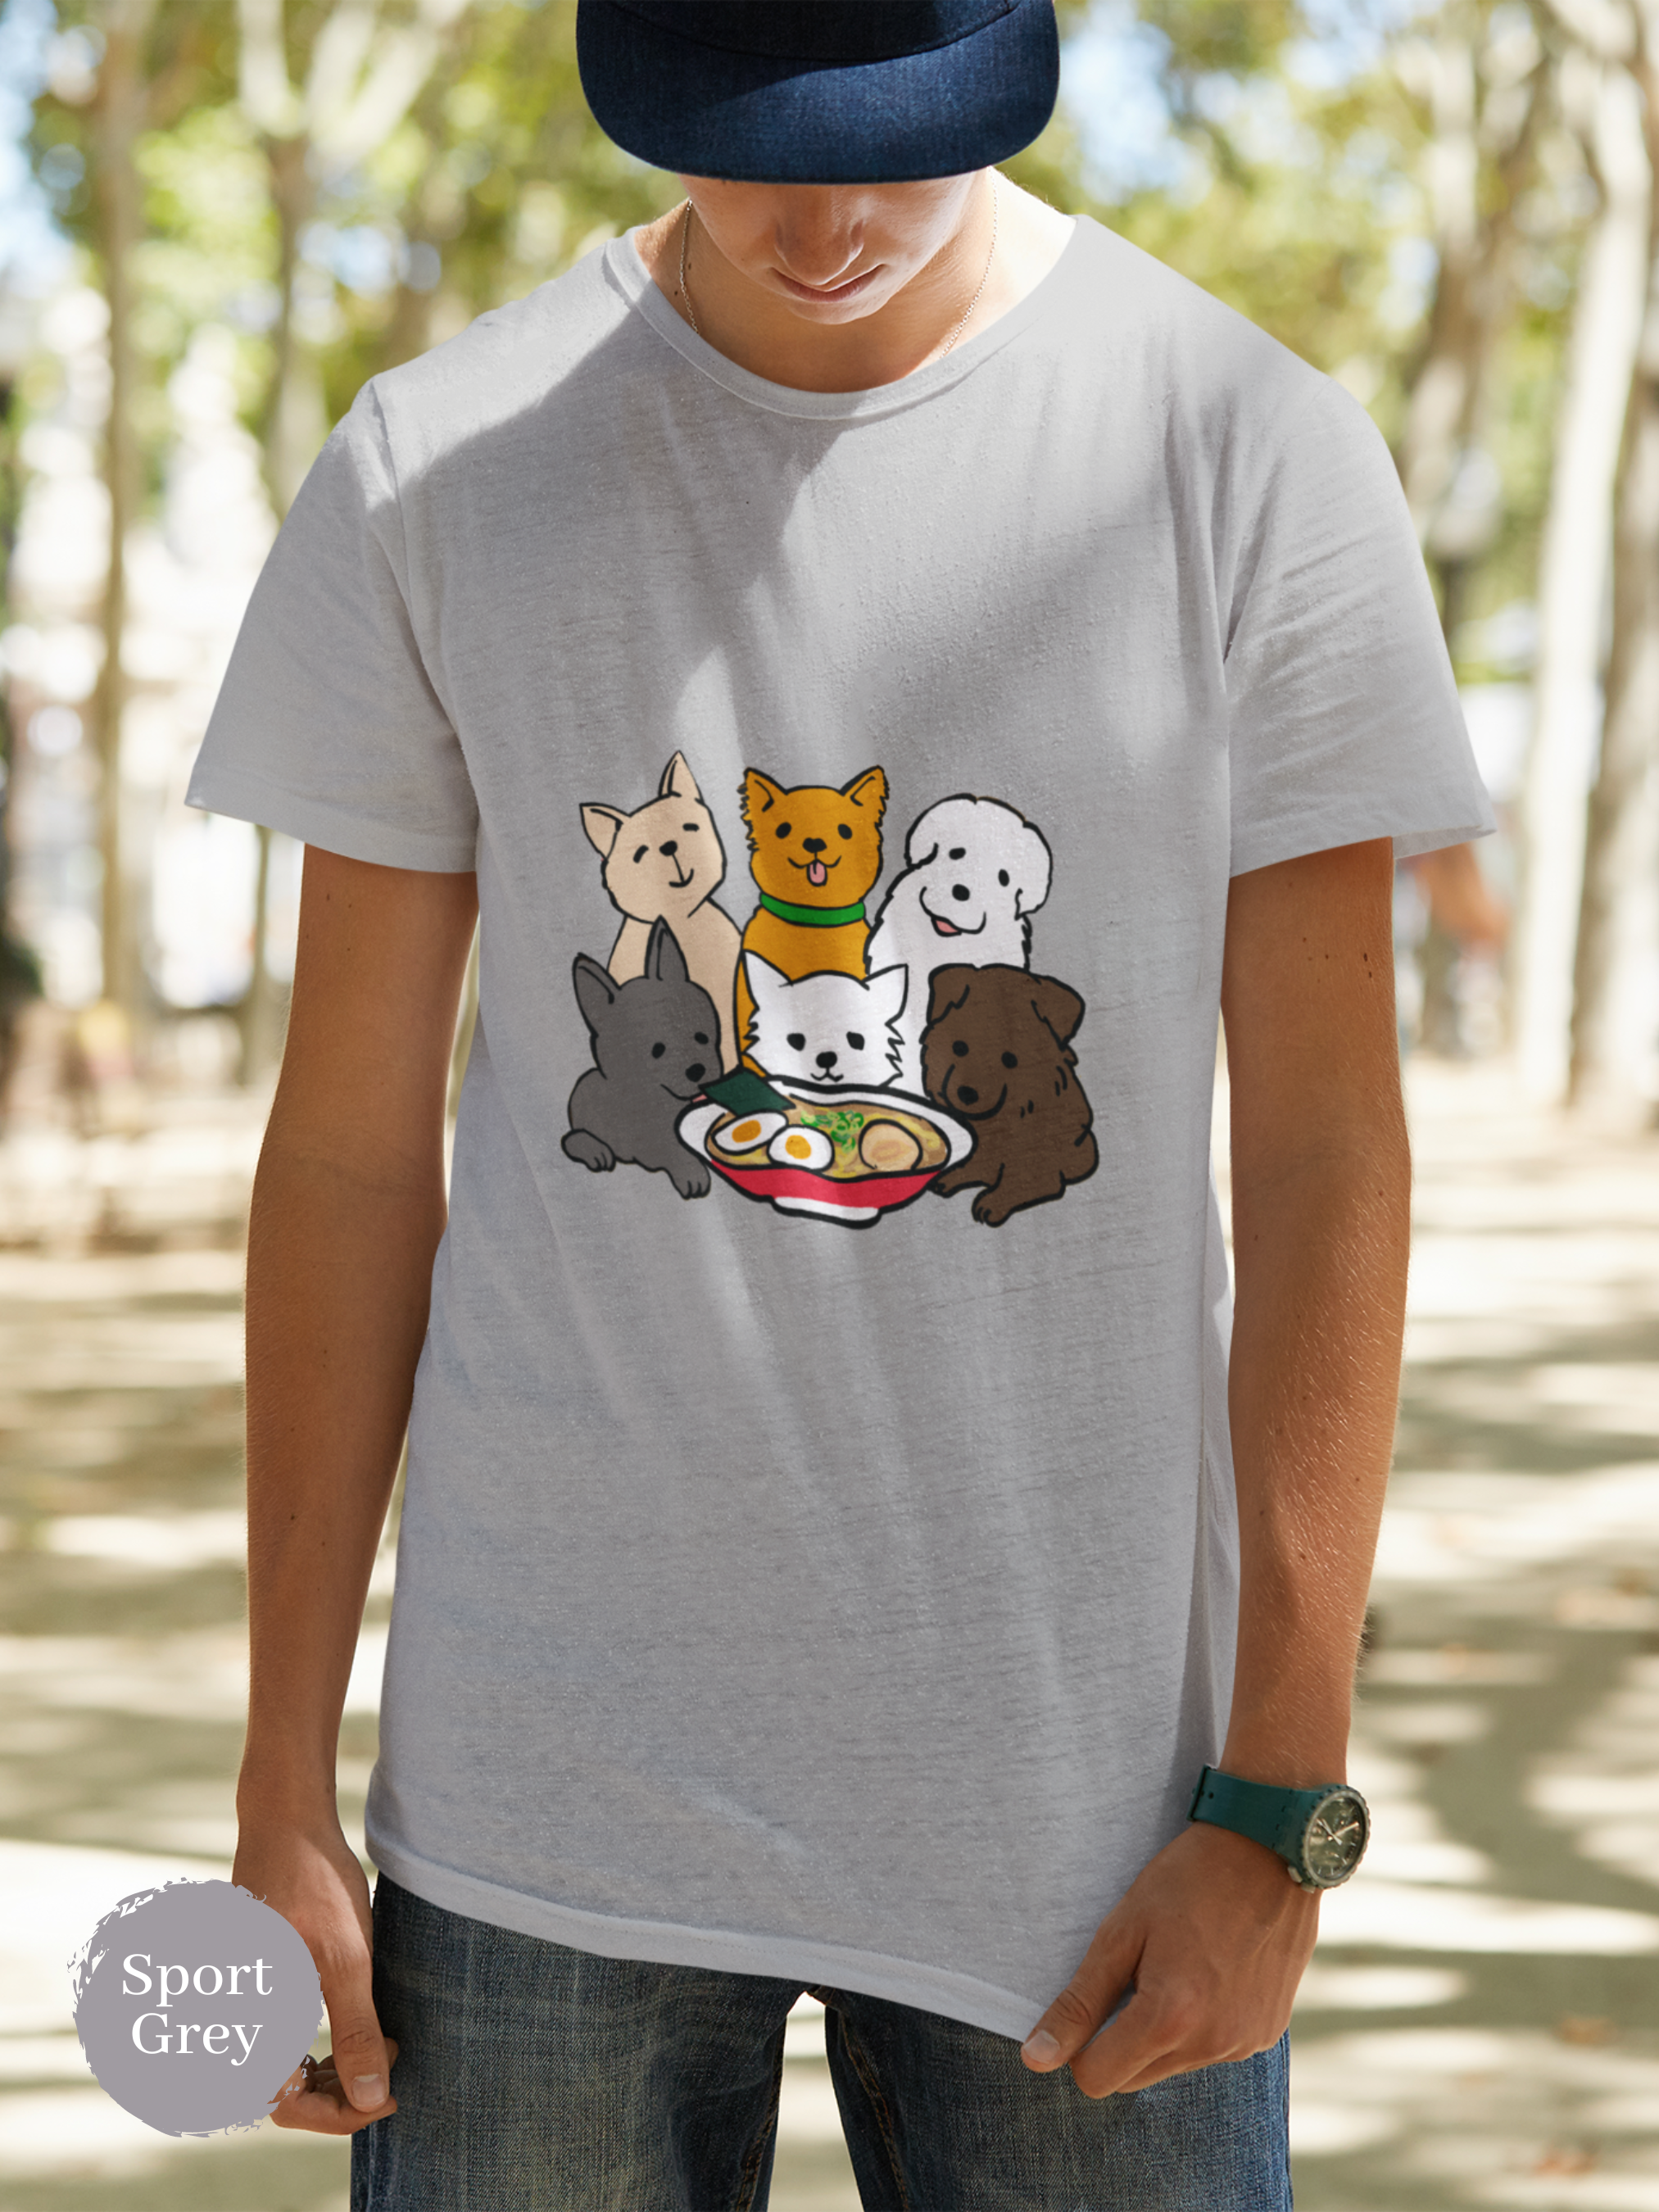 Ramen T-shirt - Six Adorable Dogs Enjoying a Bowl of Japanese Ramen - Foodie Shirt with Unique Ramen Art